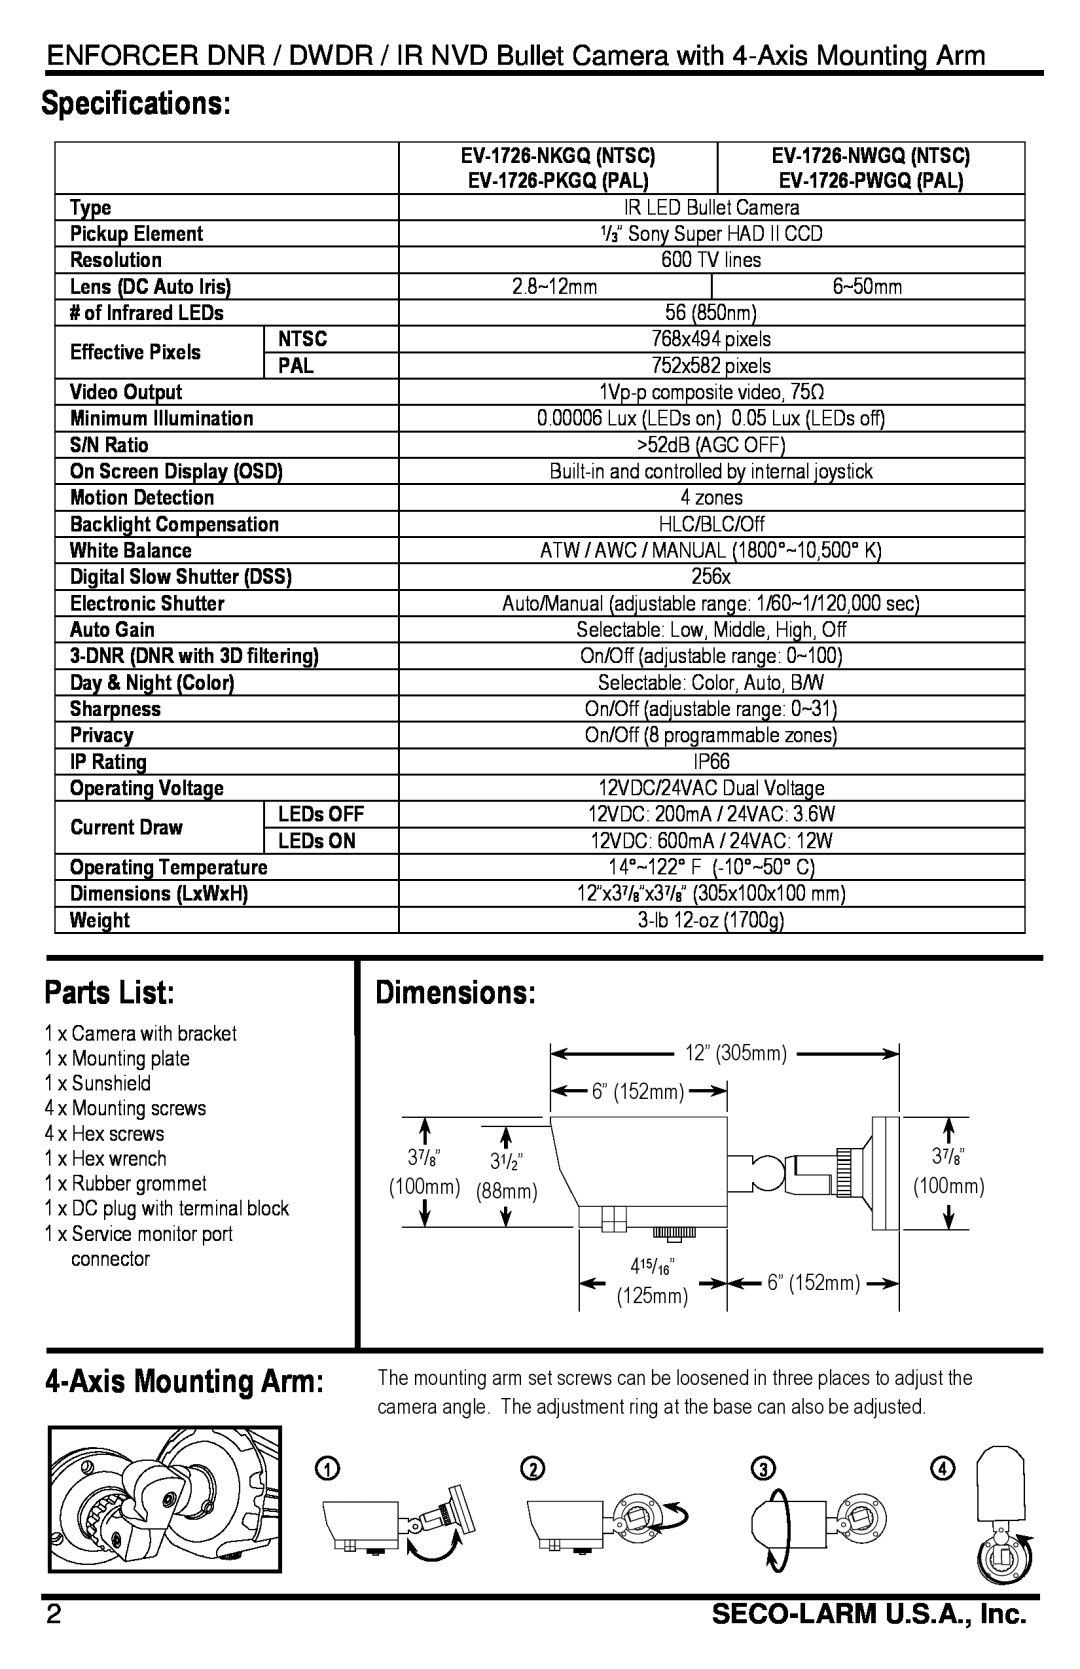 SECO-LARM USA EV-1726-NWGQ, EV-1726-PKGQ Specifications, Parts List, Dimensions, Axis Mounting Arm, SECO-LARM U.S.A., Inc 